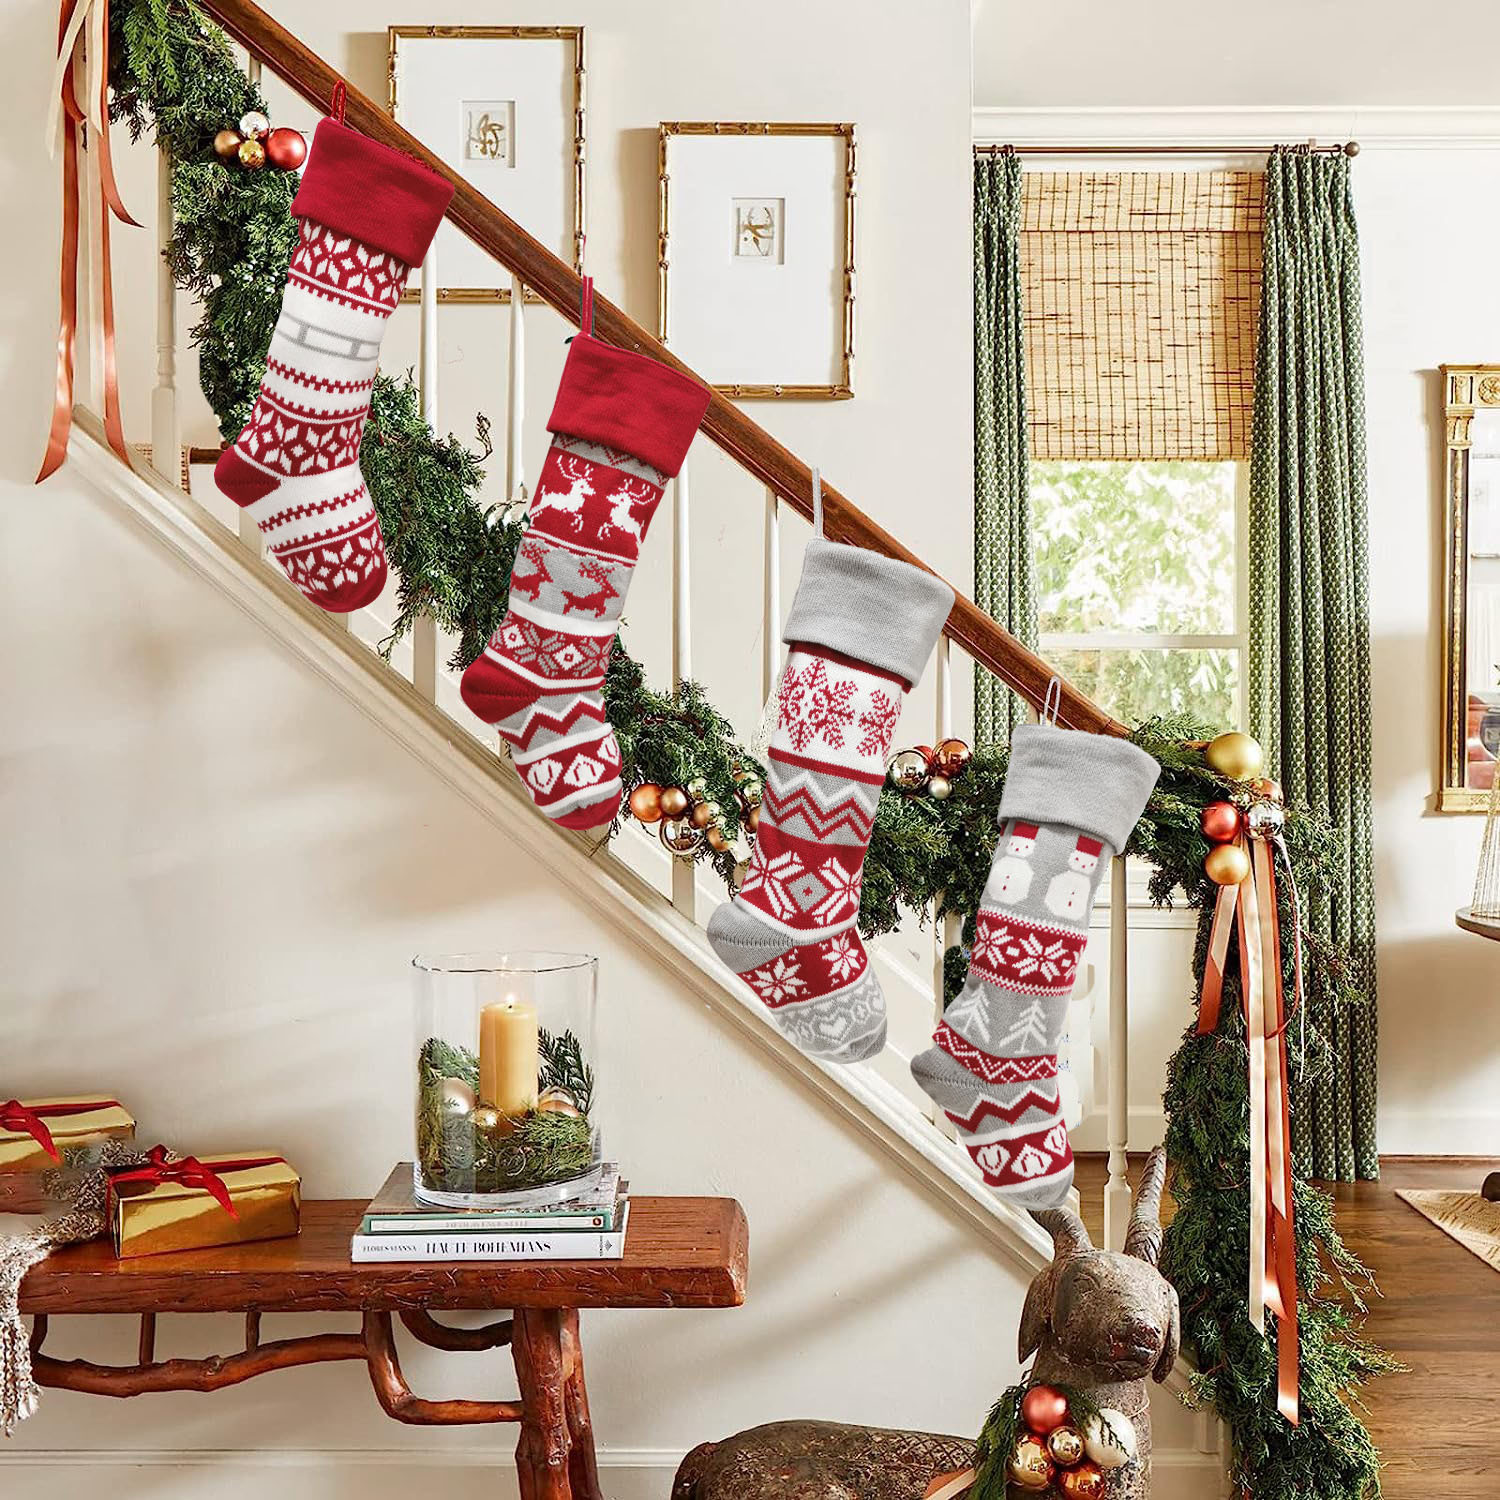 Handmade Christmas Knit Decorative Socks - Festive Holiday Gift